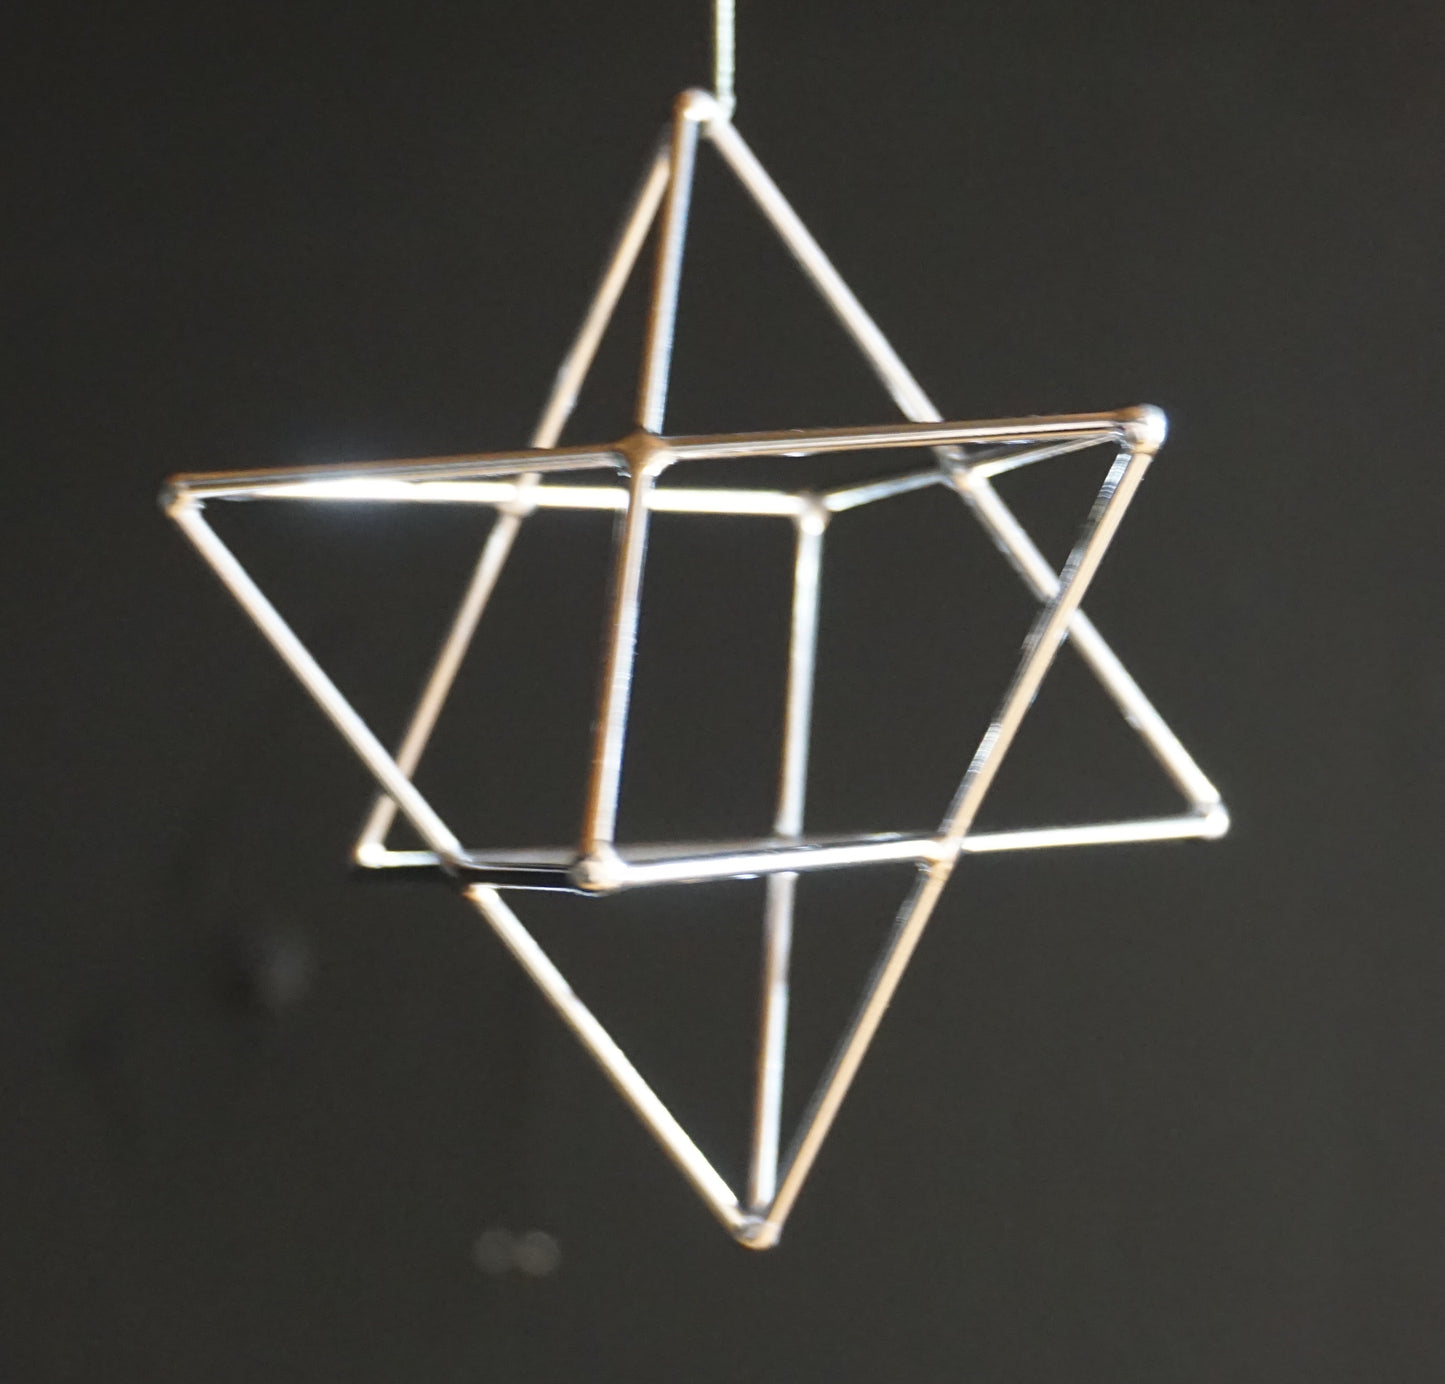 Ref.ST0041 - Star Tetrahedron